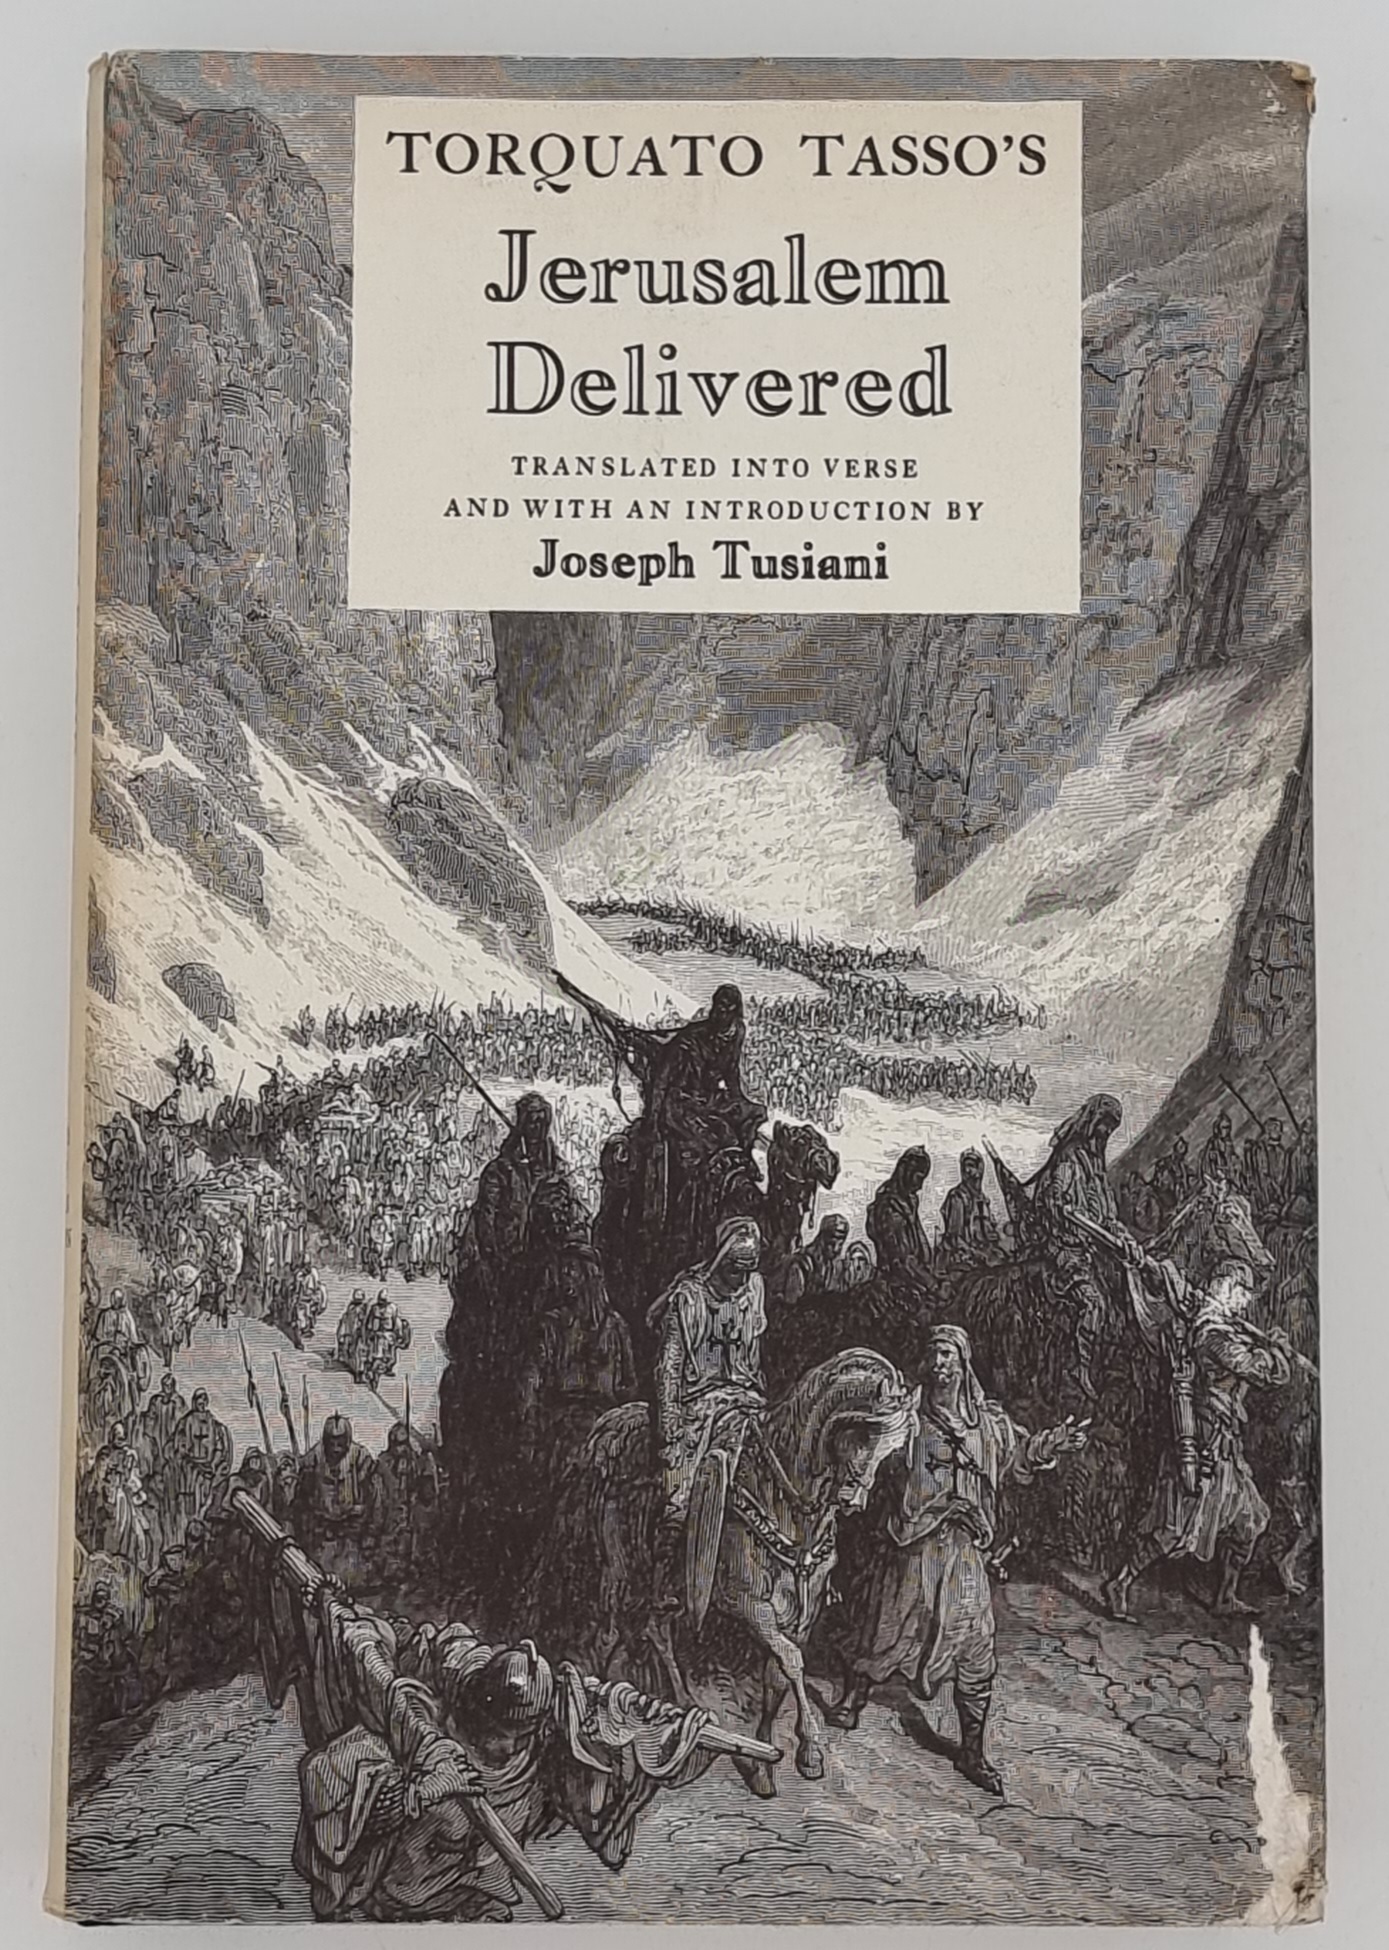 Jerusalem delivered - TASSO, TORQUATO; TUSIANI, JOSEPH (TRANS)